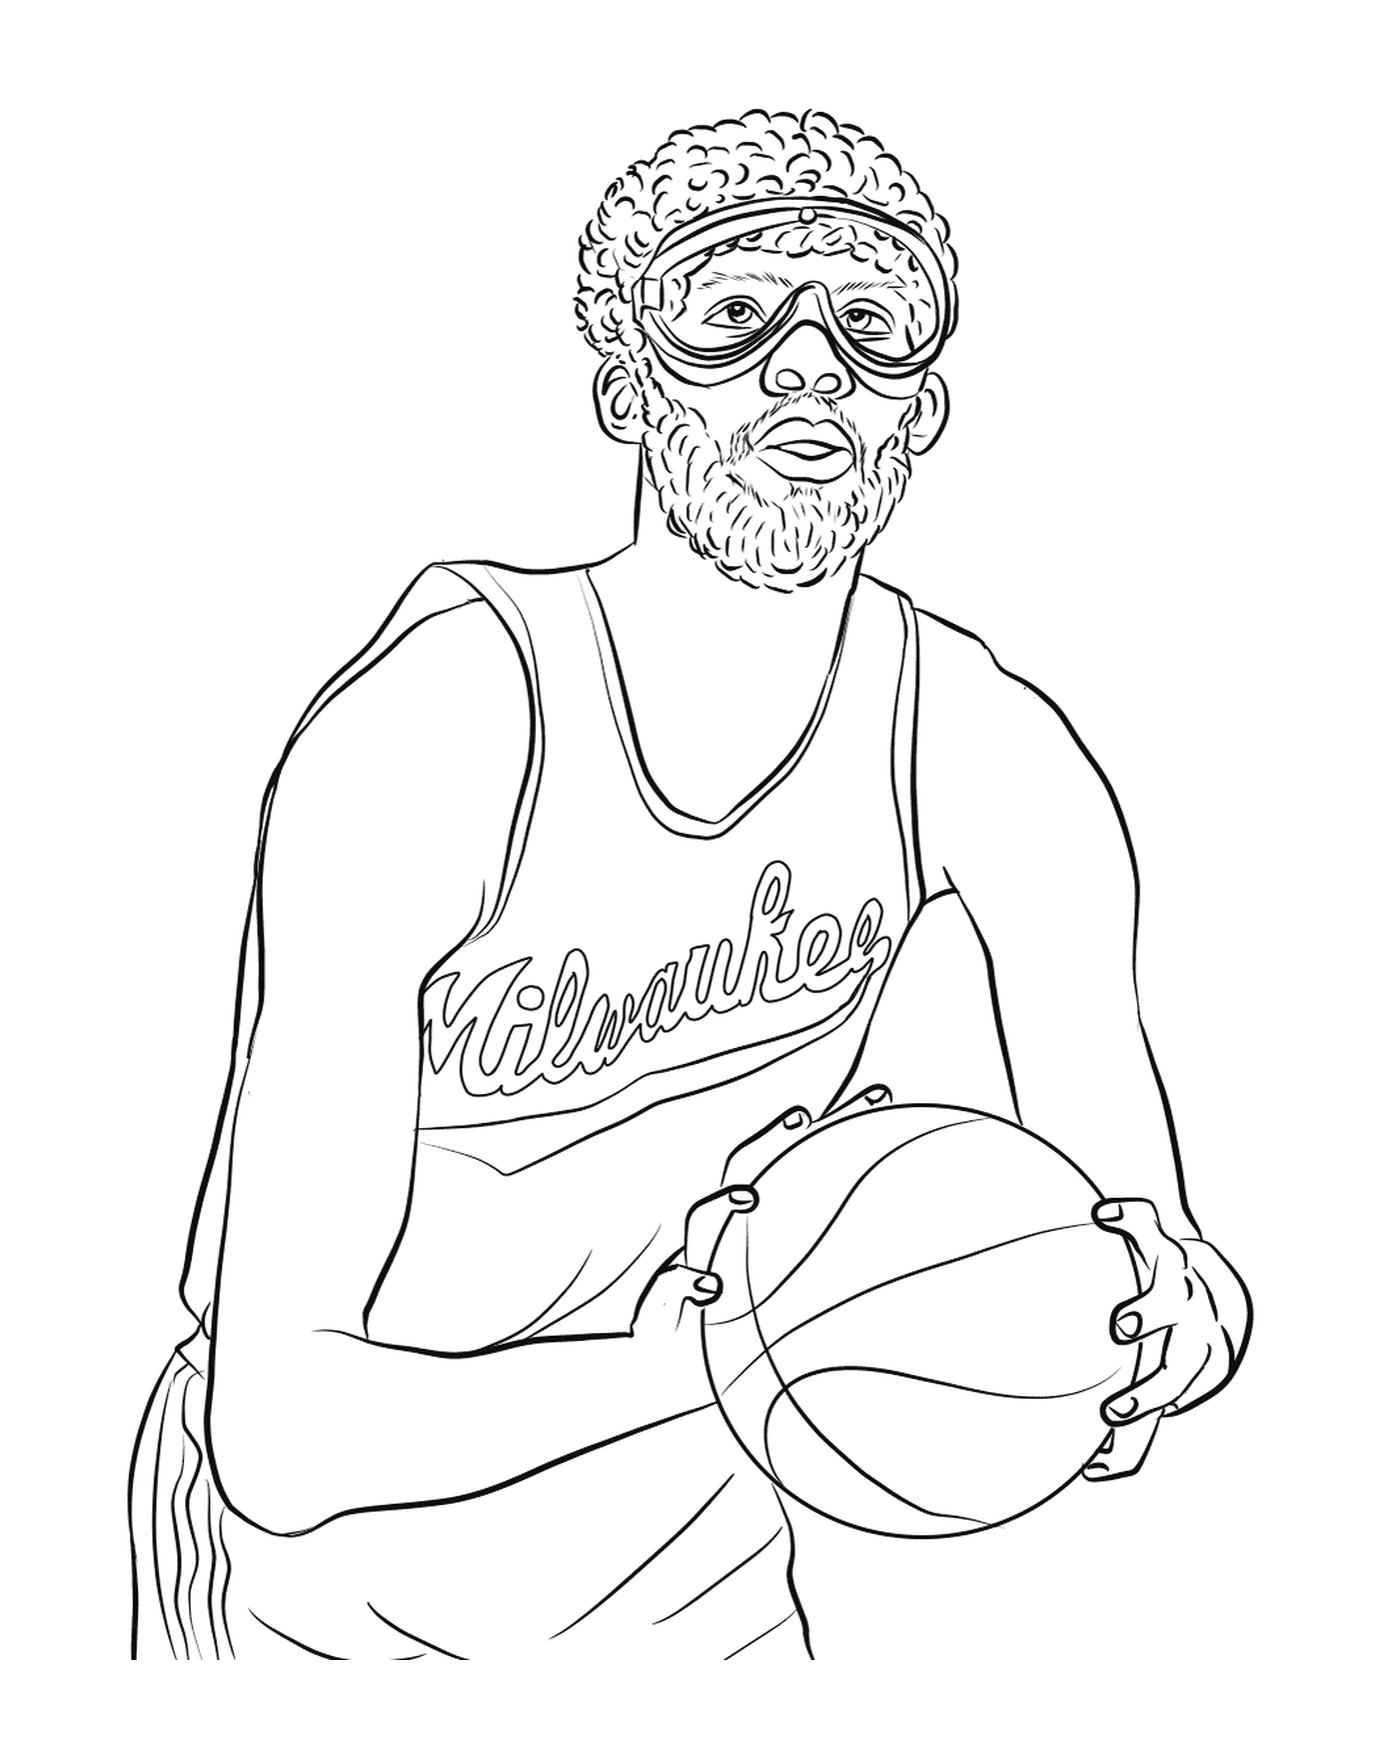  Un uomo che tiene una pallacanestro tra le mani 